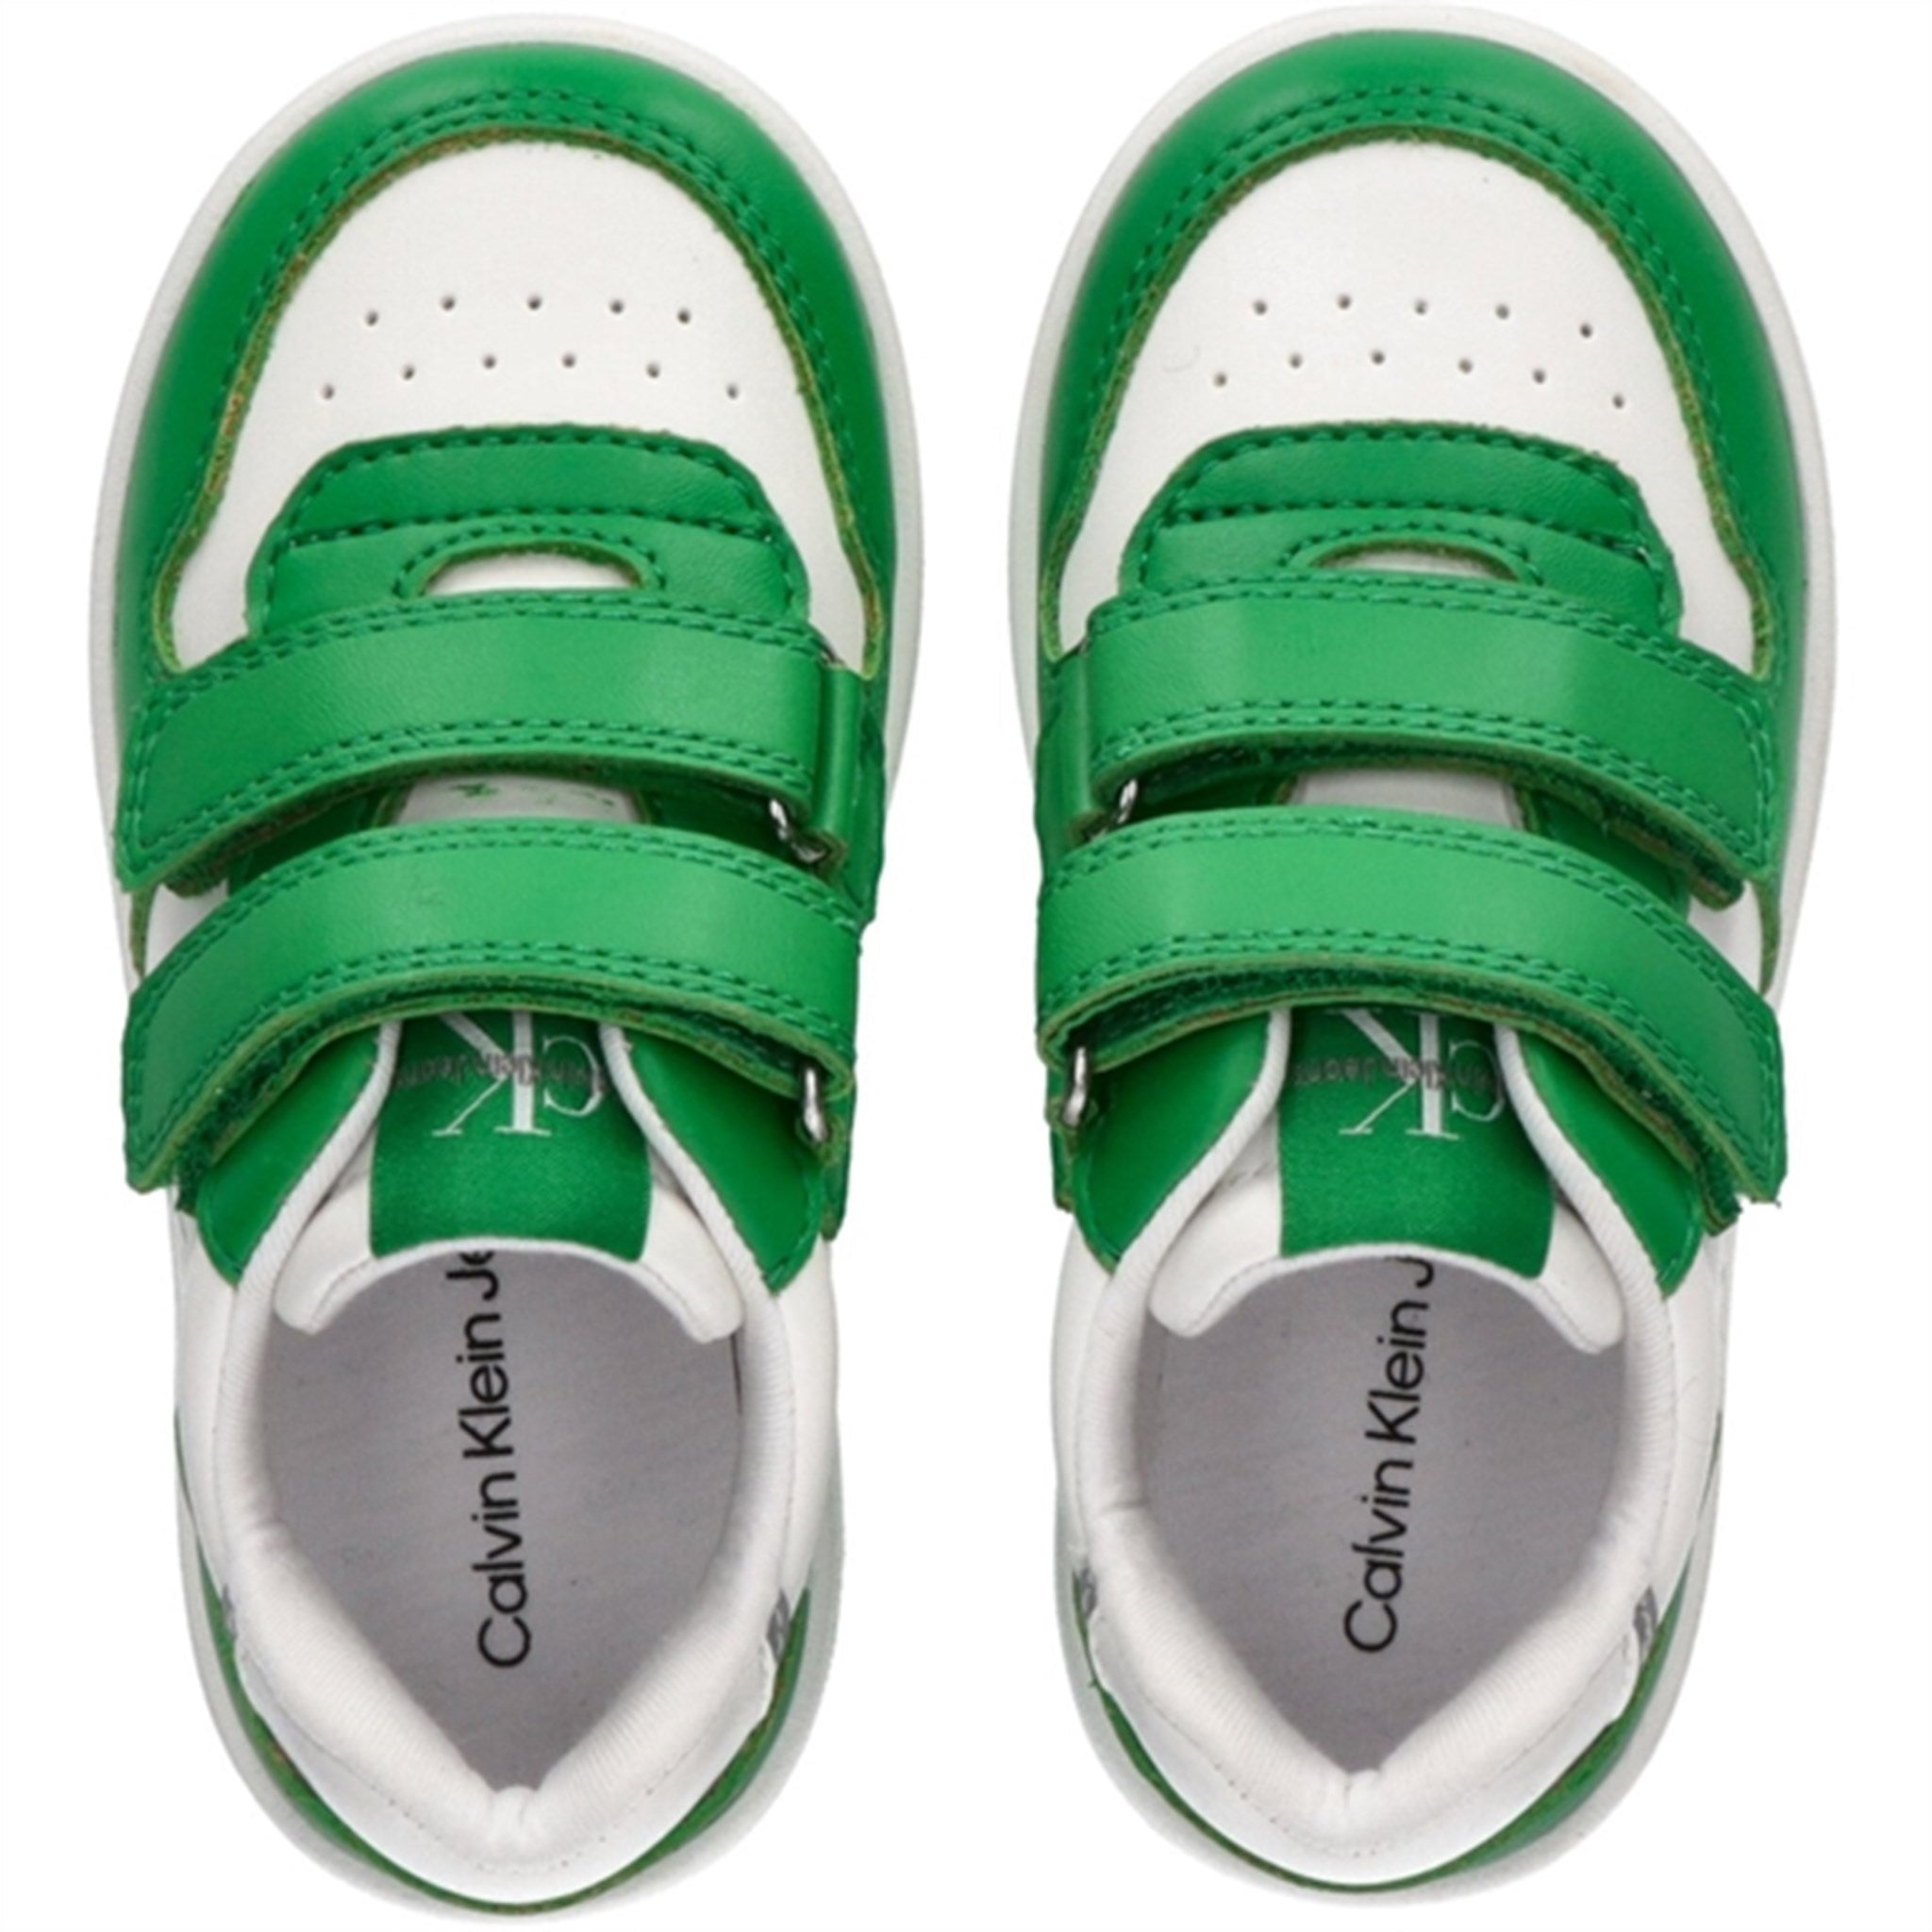 Calvin Klein Low Cut Velcro Sneakers Green/White